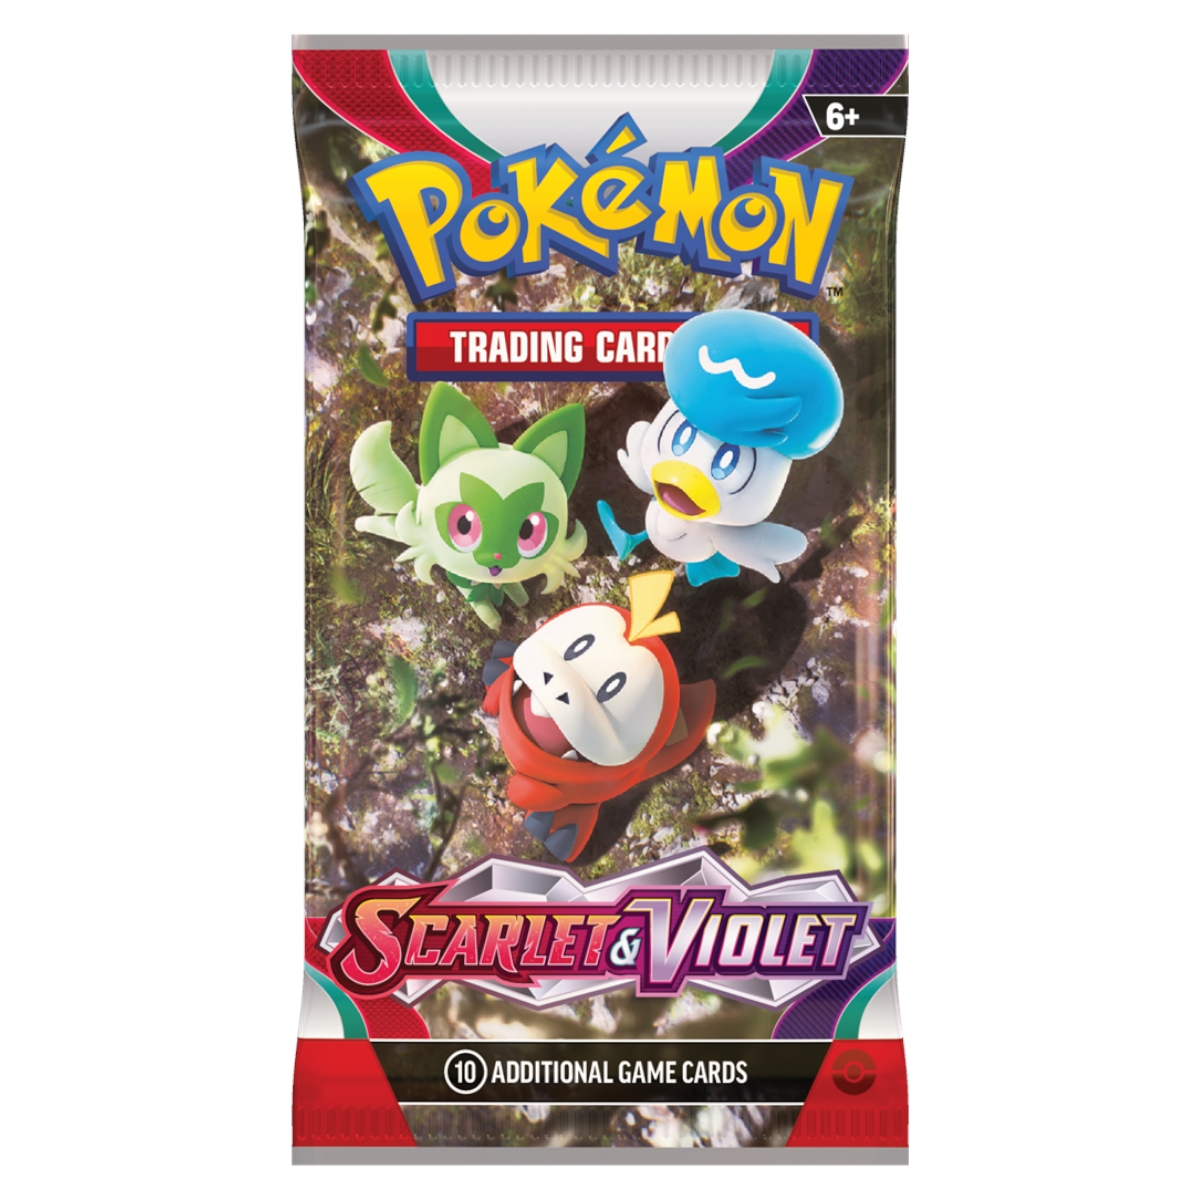 Pokémon - Scarlet & Violet Booster